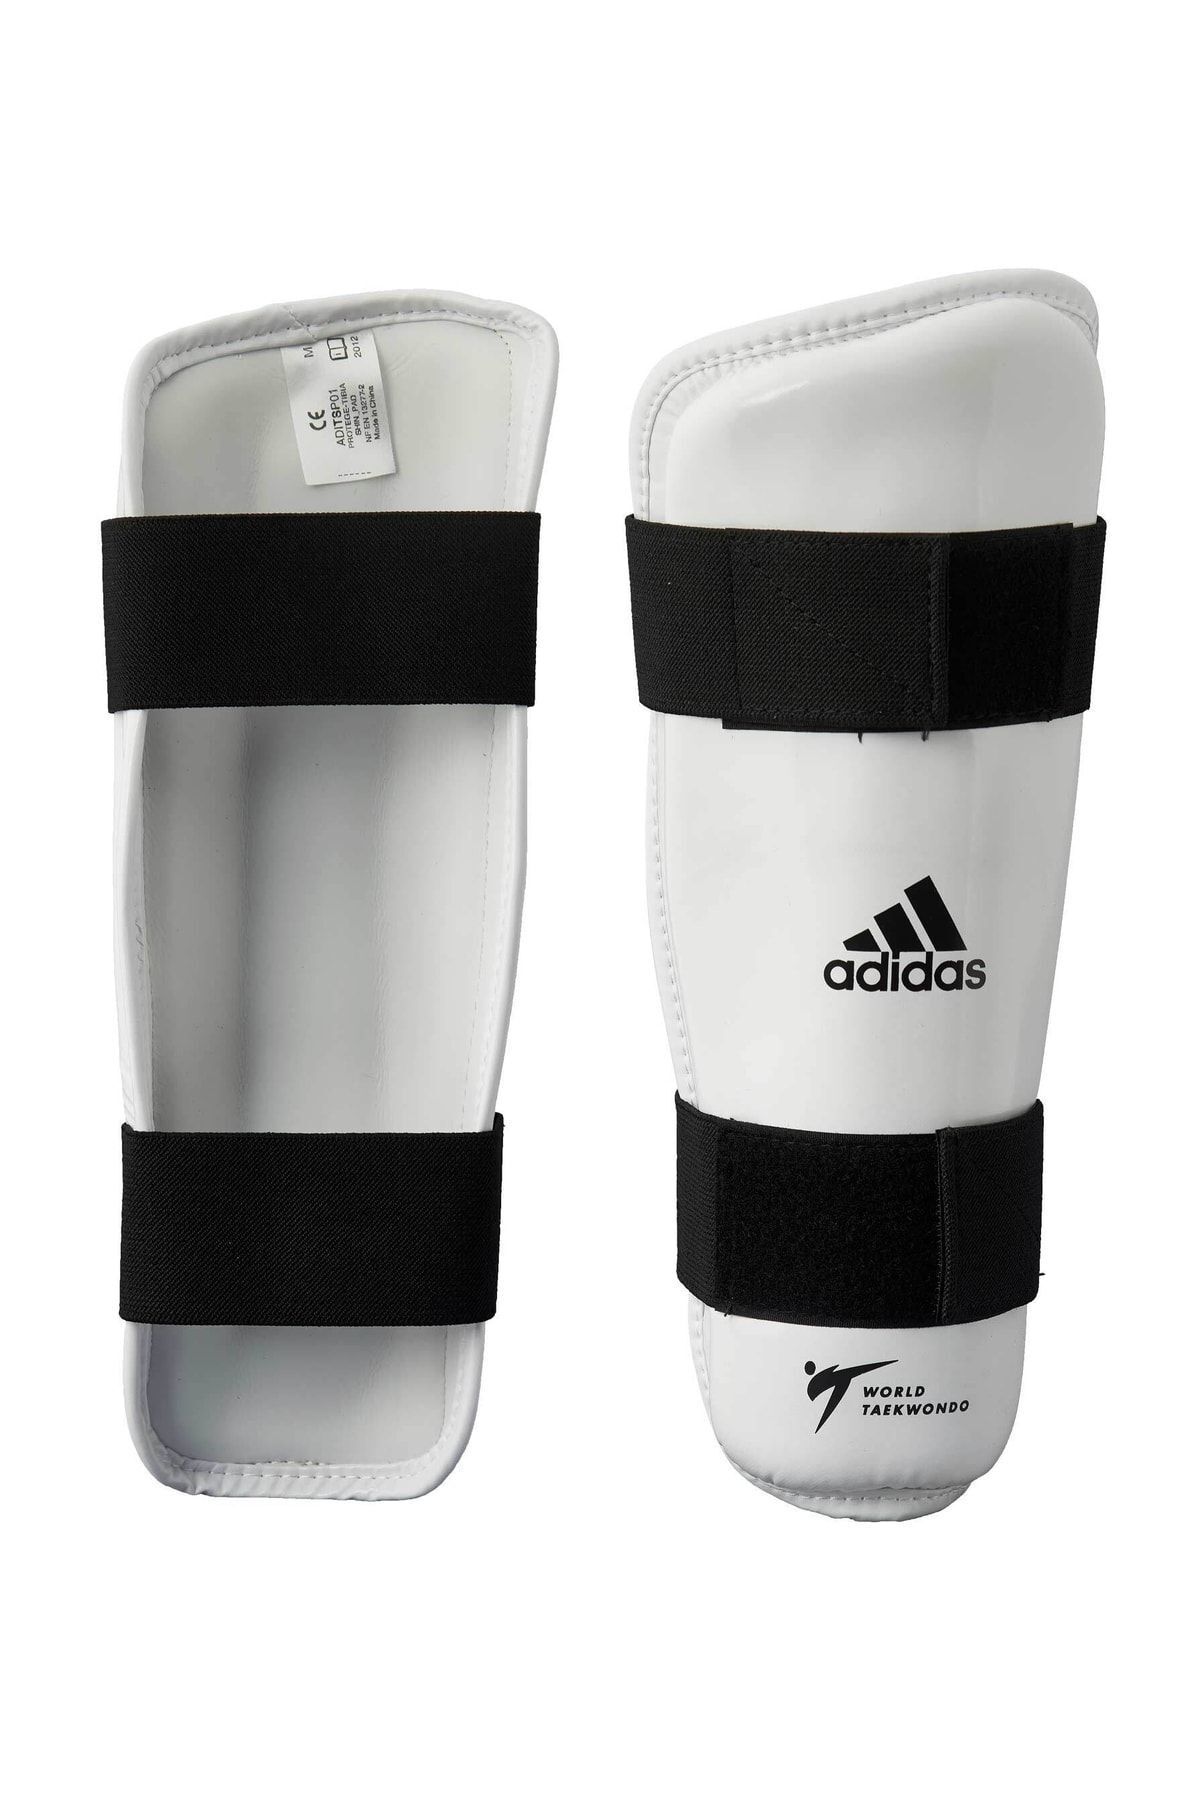 adidas Taekwondo Kaval Koruyucu Adıtsp01